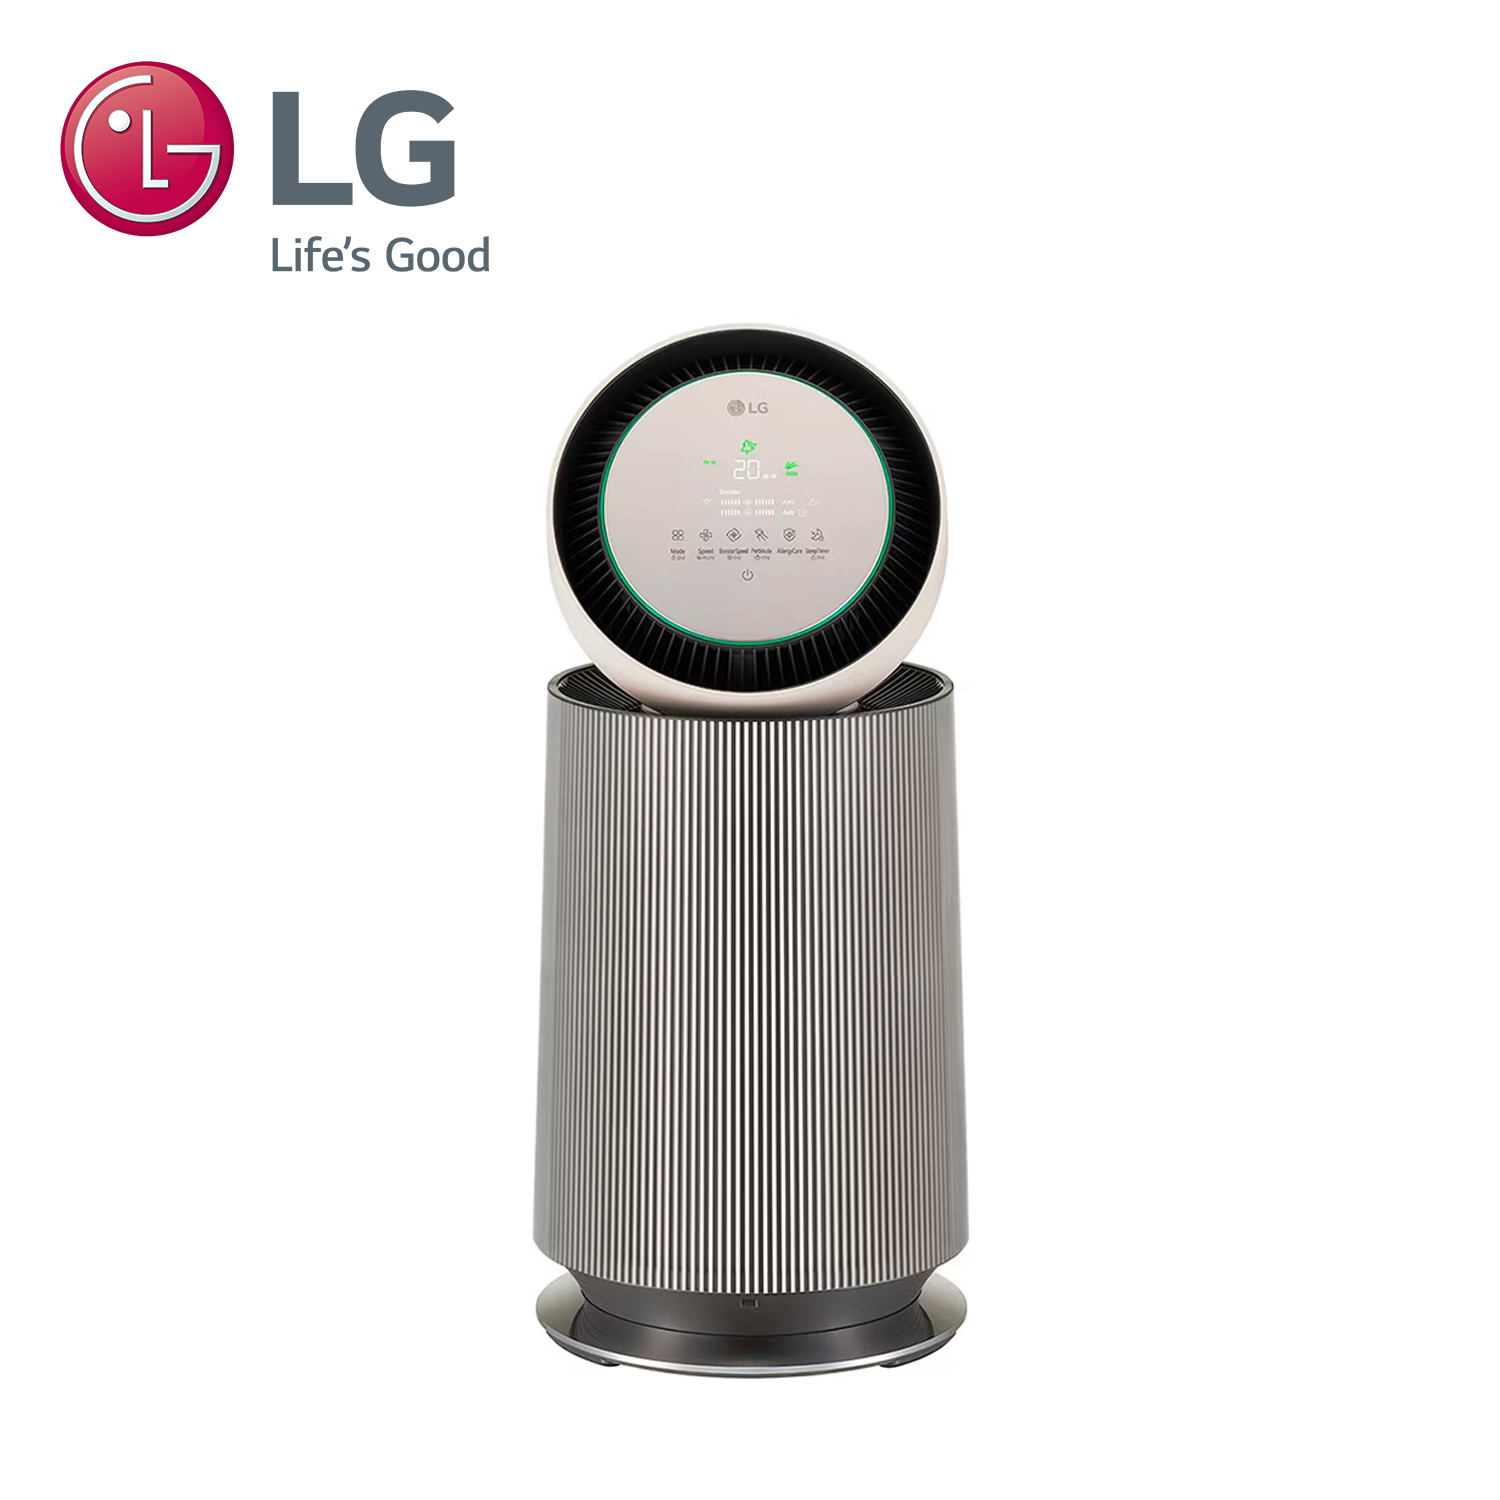 LG Air cleaner AS651DBY0